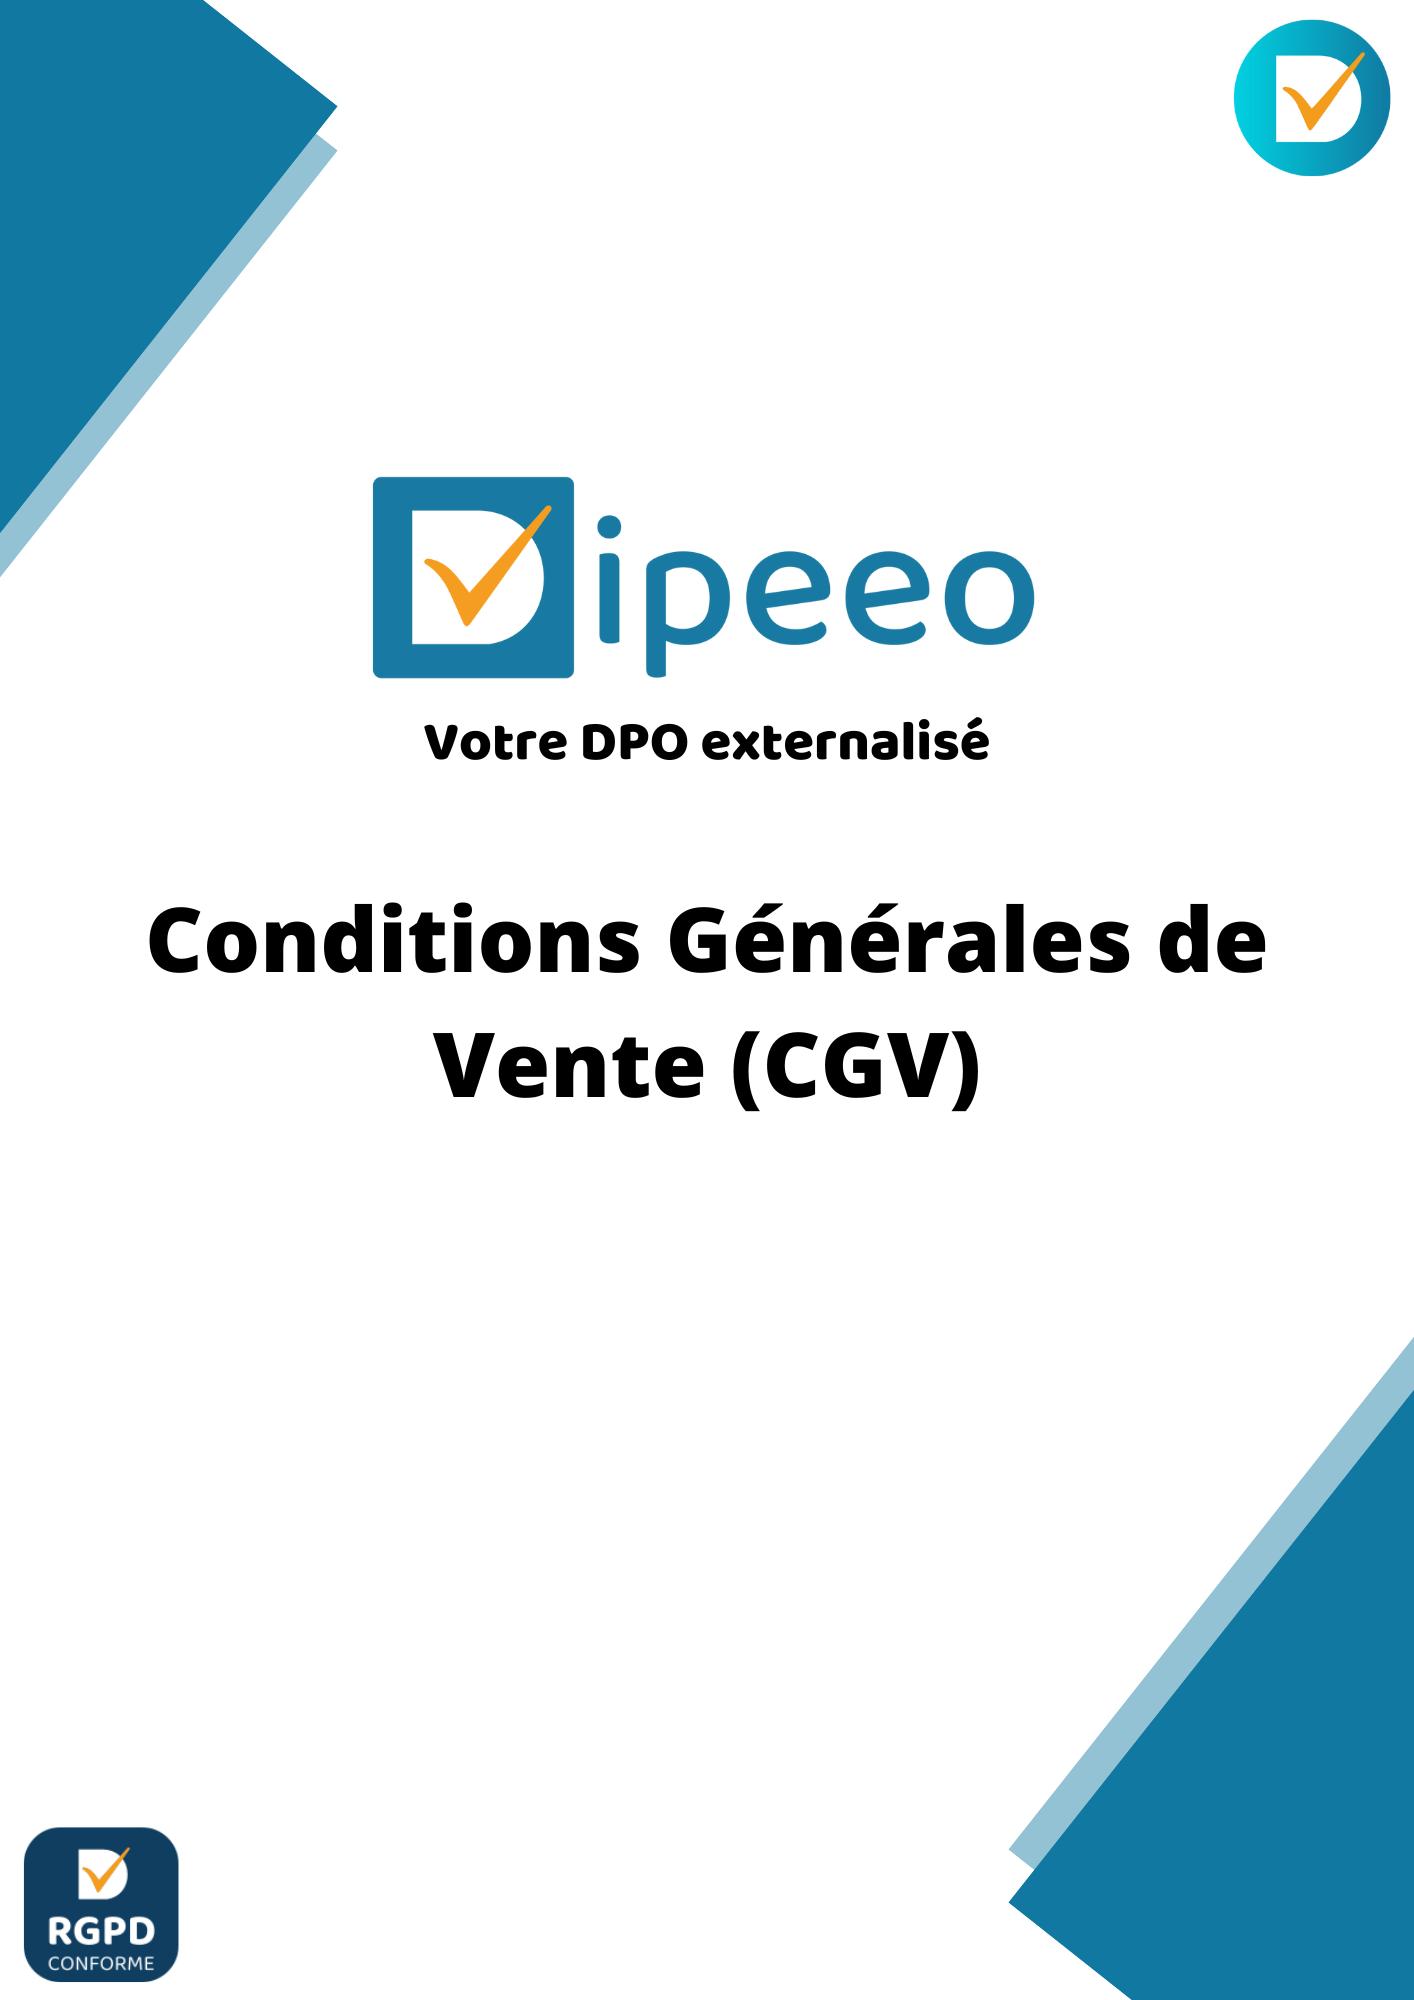 CGV Exemple pdf - Conditions Générales de Vente Dipeeo